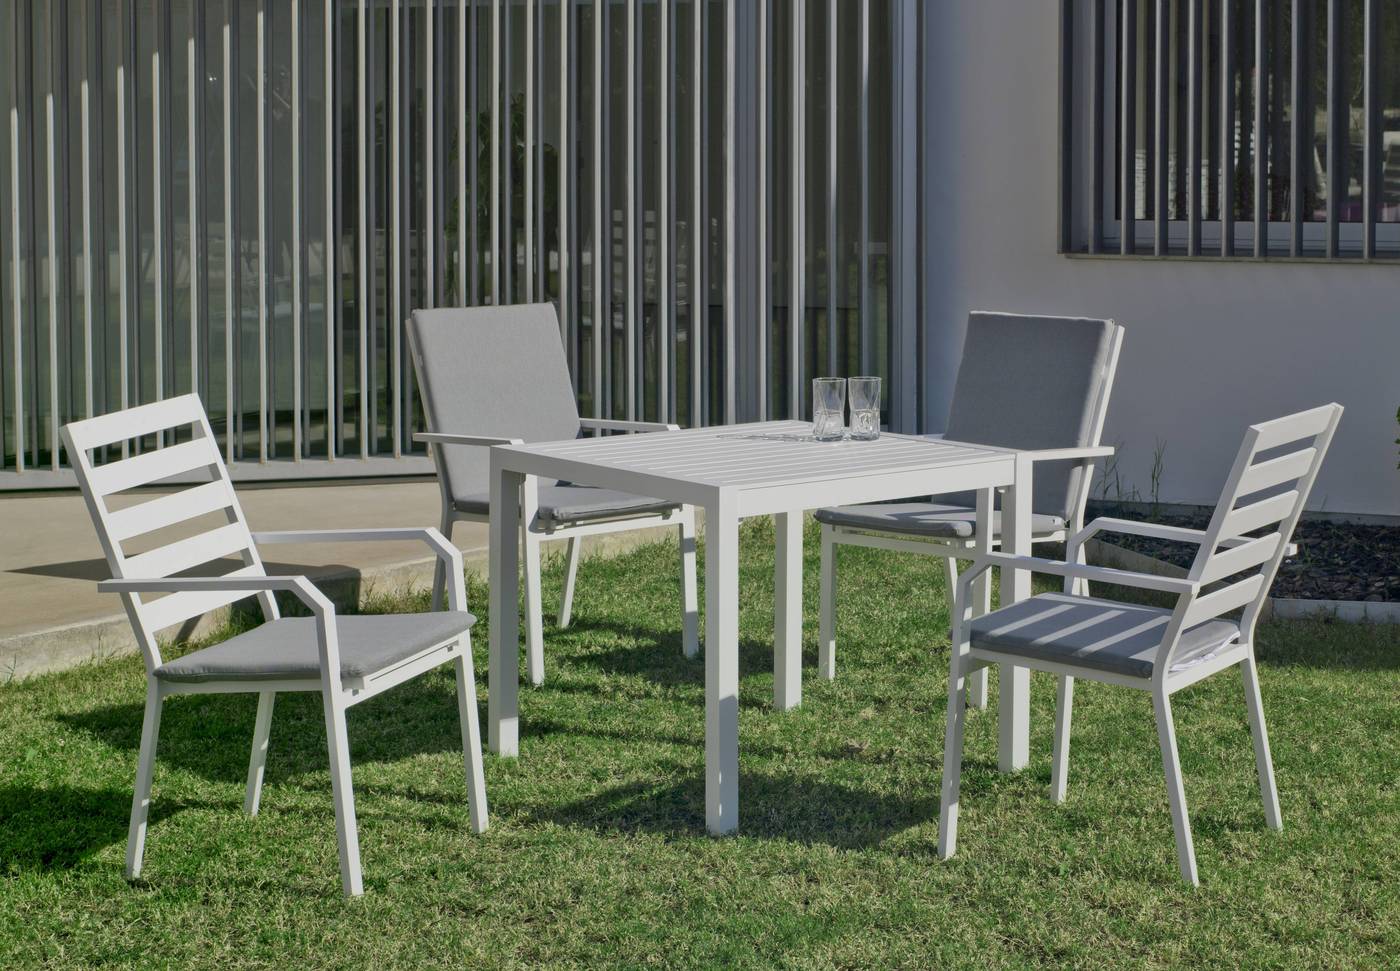 Conjunto aluminio luxe: Mesa cuadrada 90 cm + 4 sillones. Disponible en color blanco, antracita, champagne, plata o marrón.